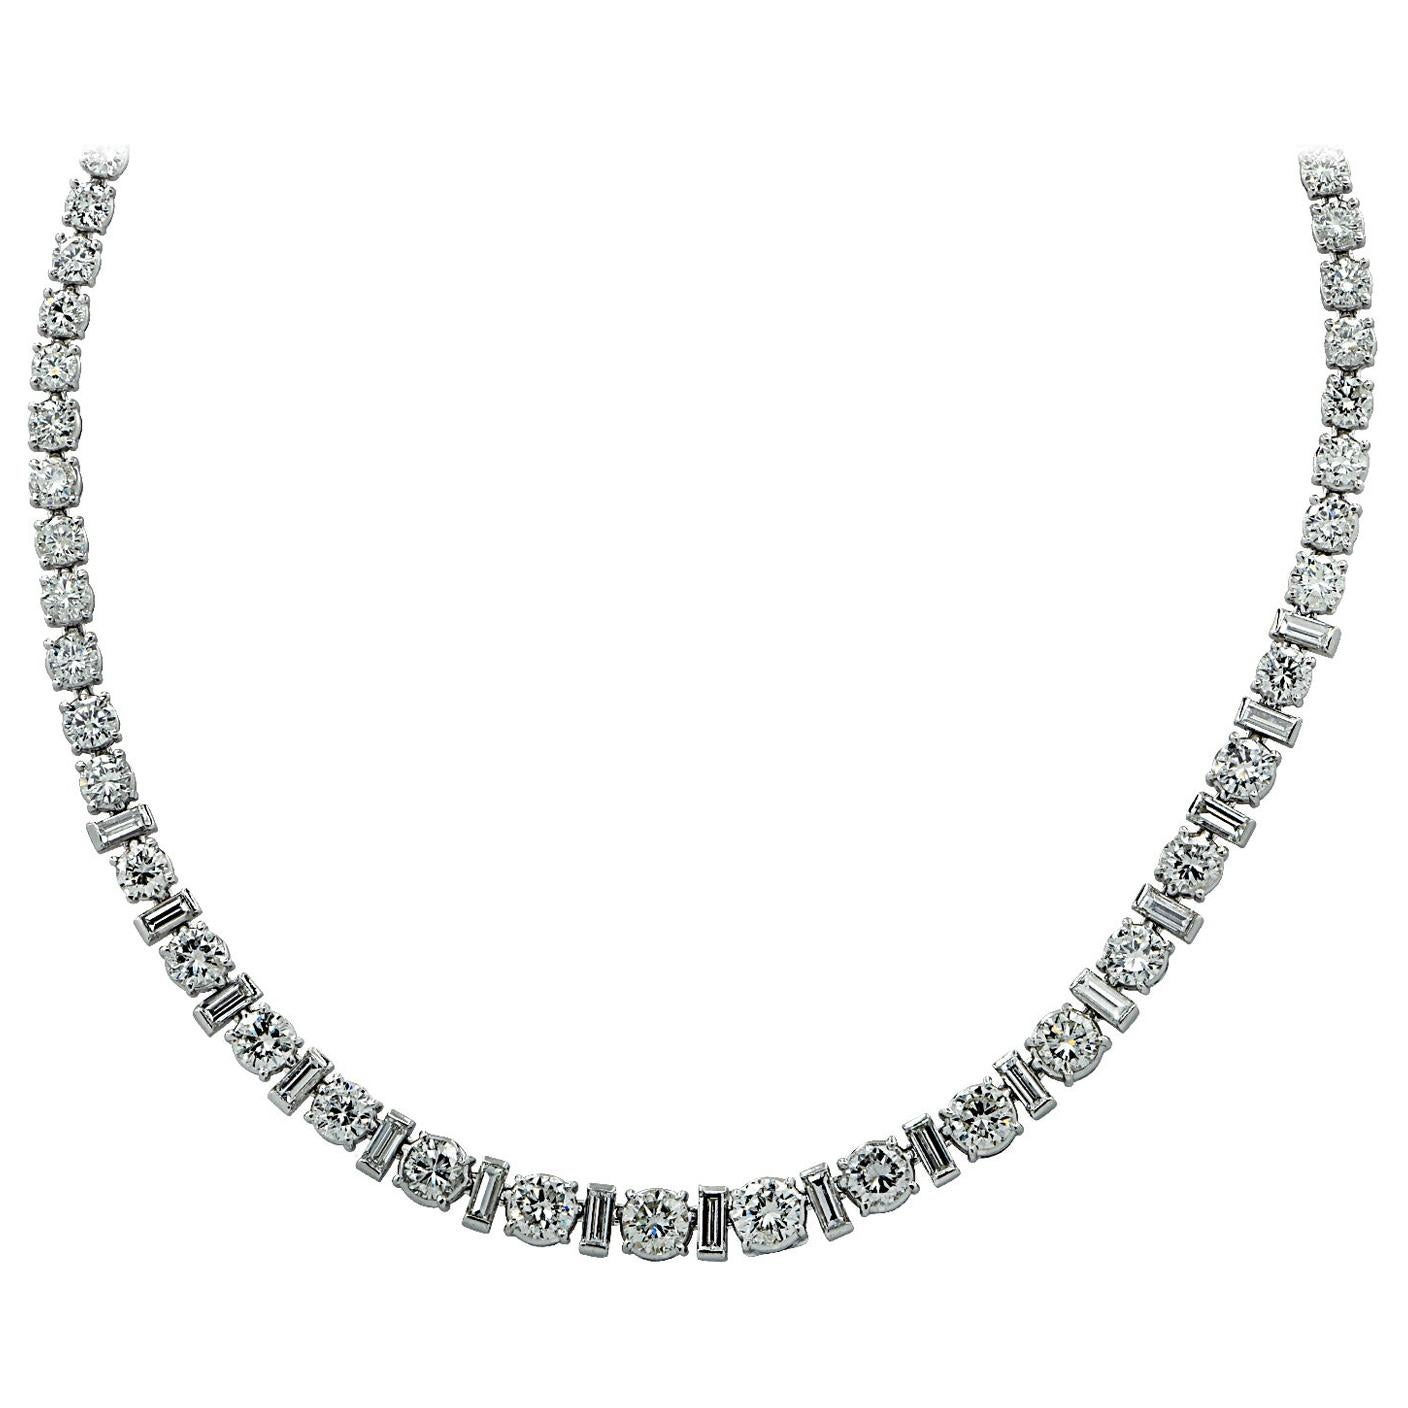 22 Carat Diamond Riviere Necklace